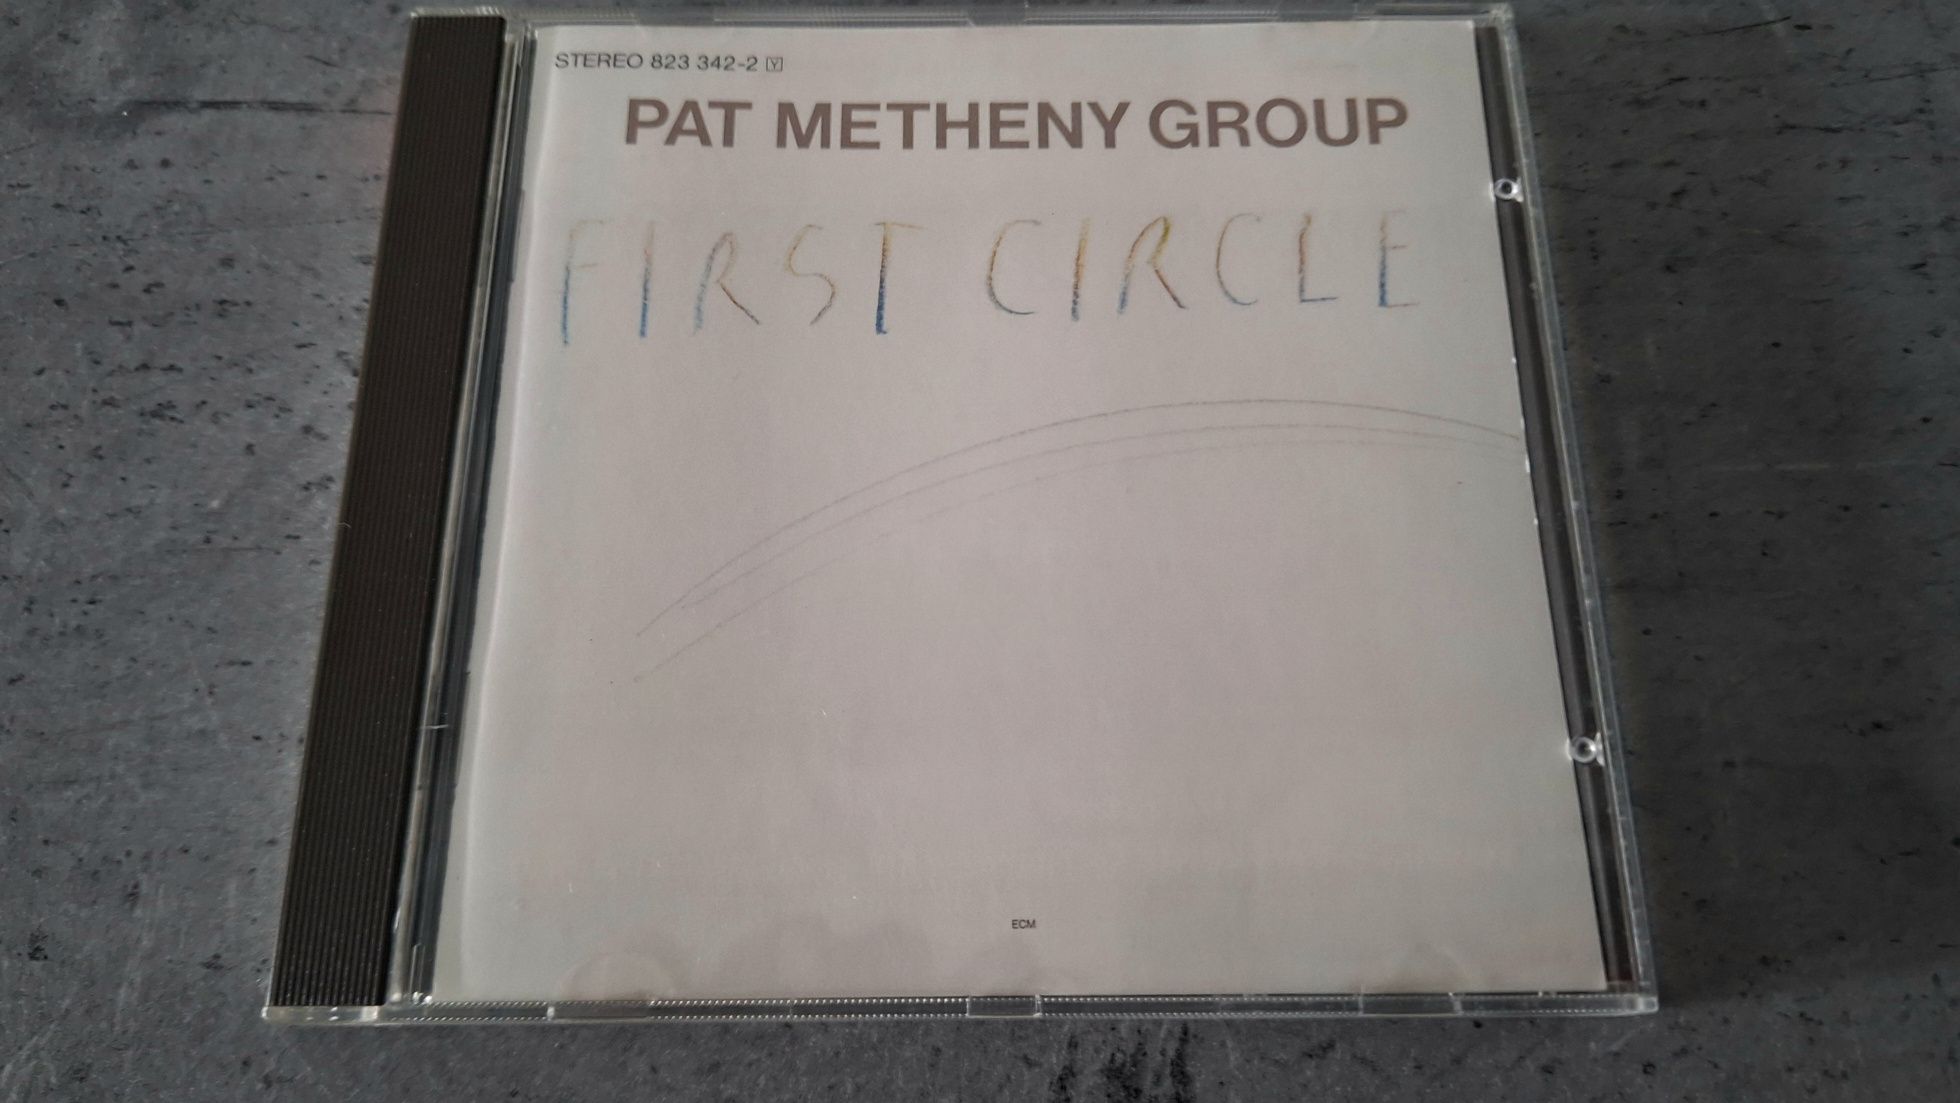 Pat Metheny Group-First Circle 1984 CD